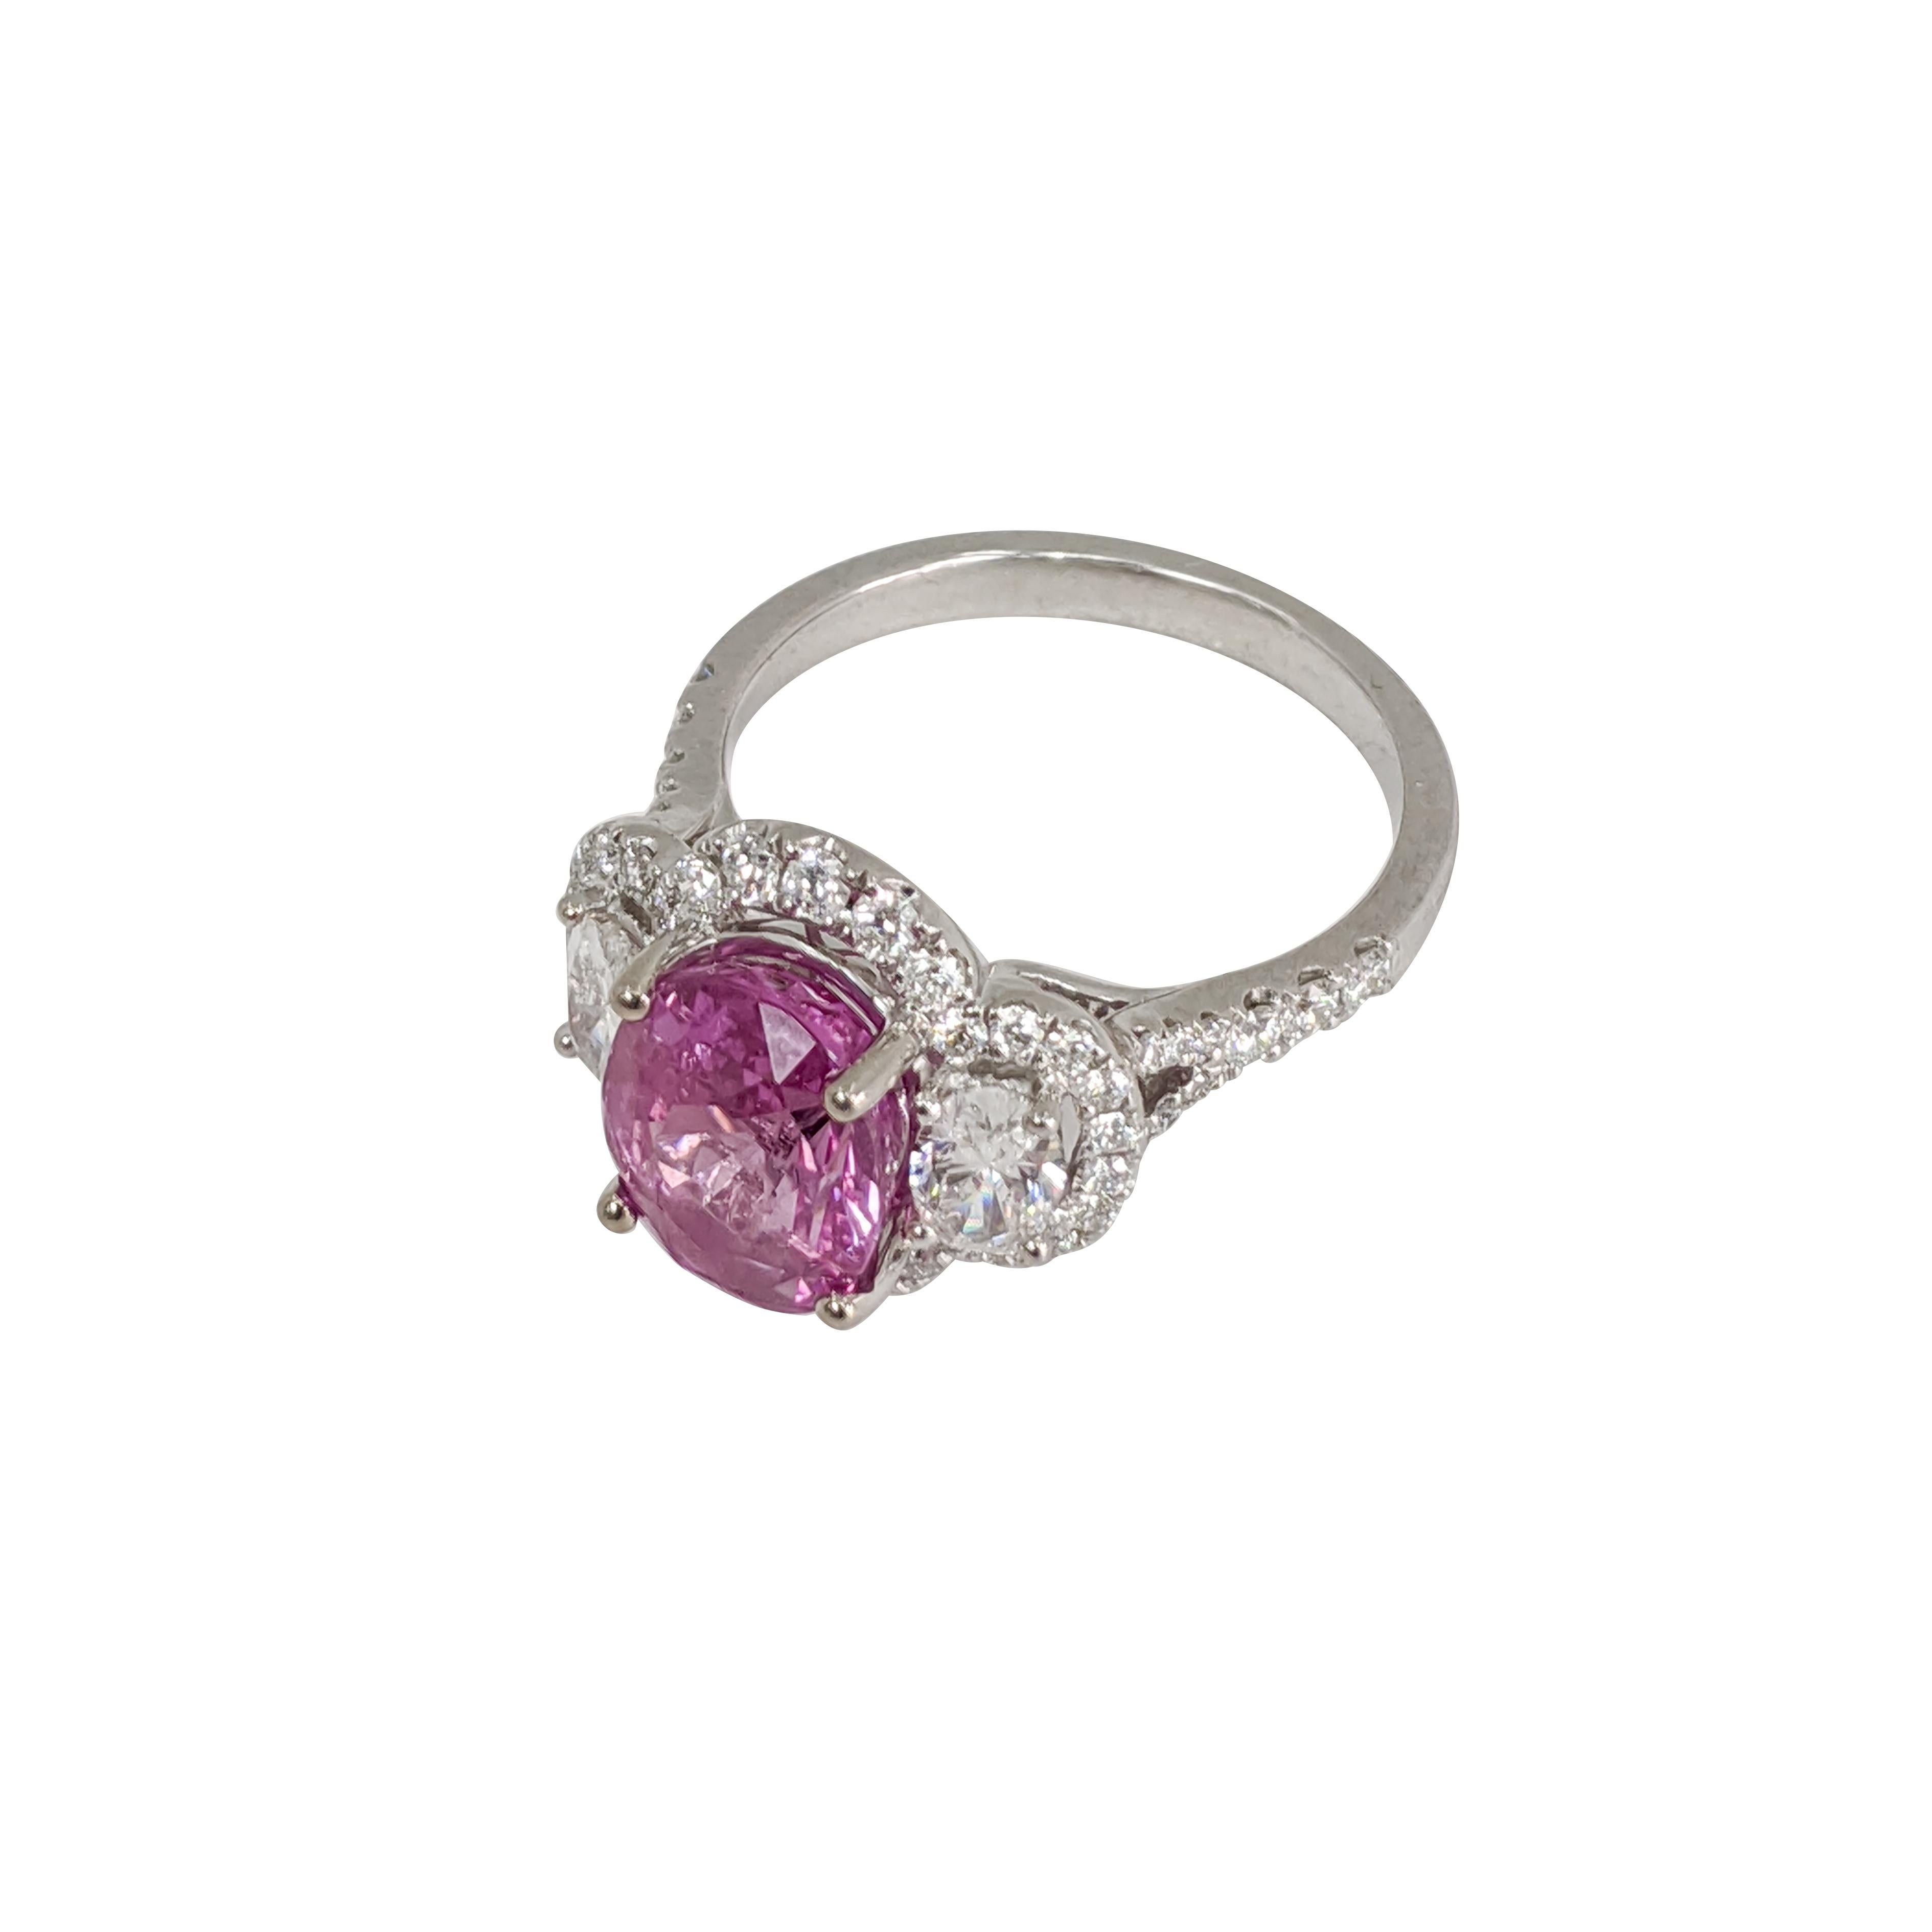 1 Pink Sapphire (Oval) 4.05ct
2 Diamonds (Oval) 1.18ct
Platinum Ring
3 Stone